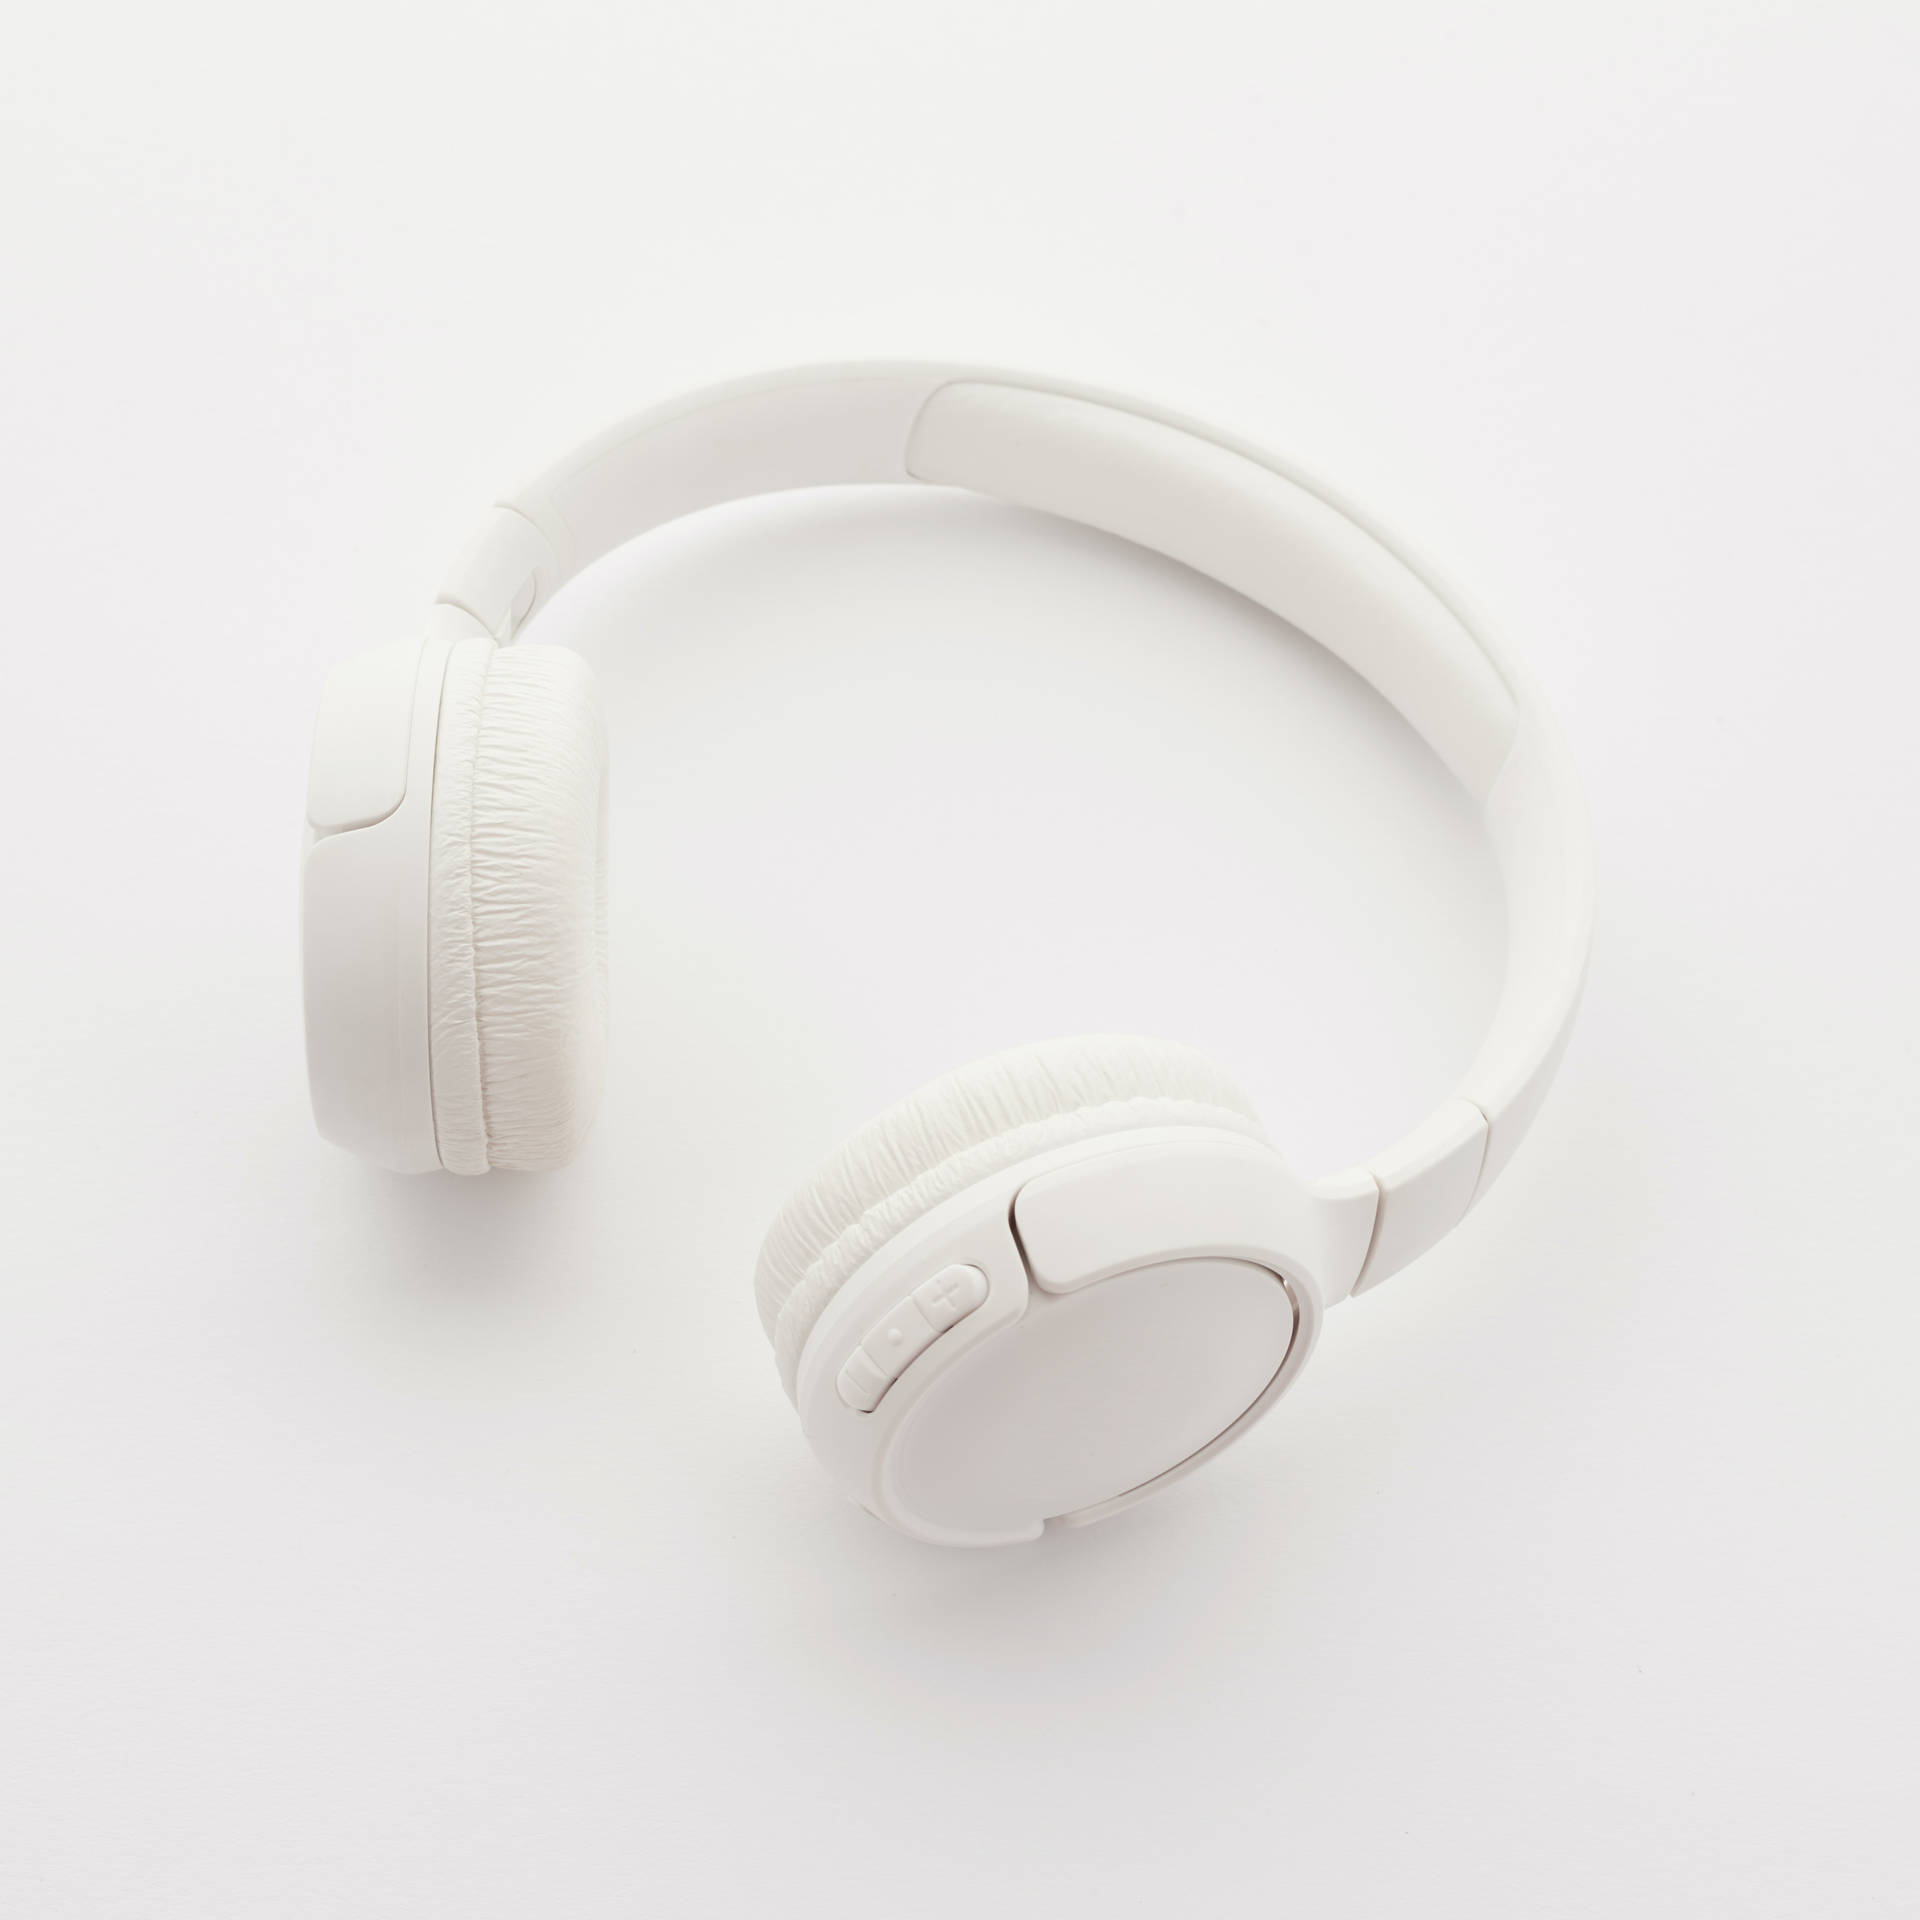 White Hd Headphones